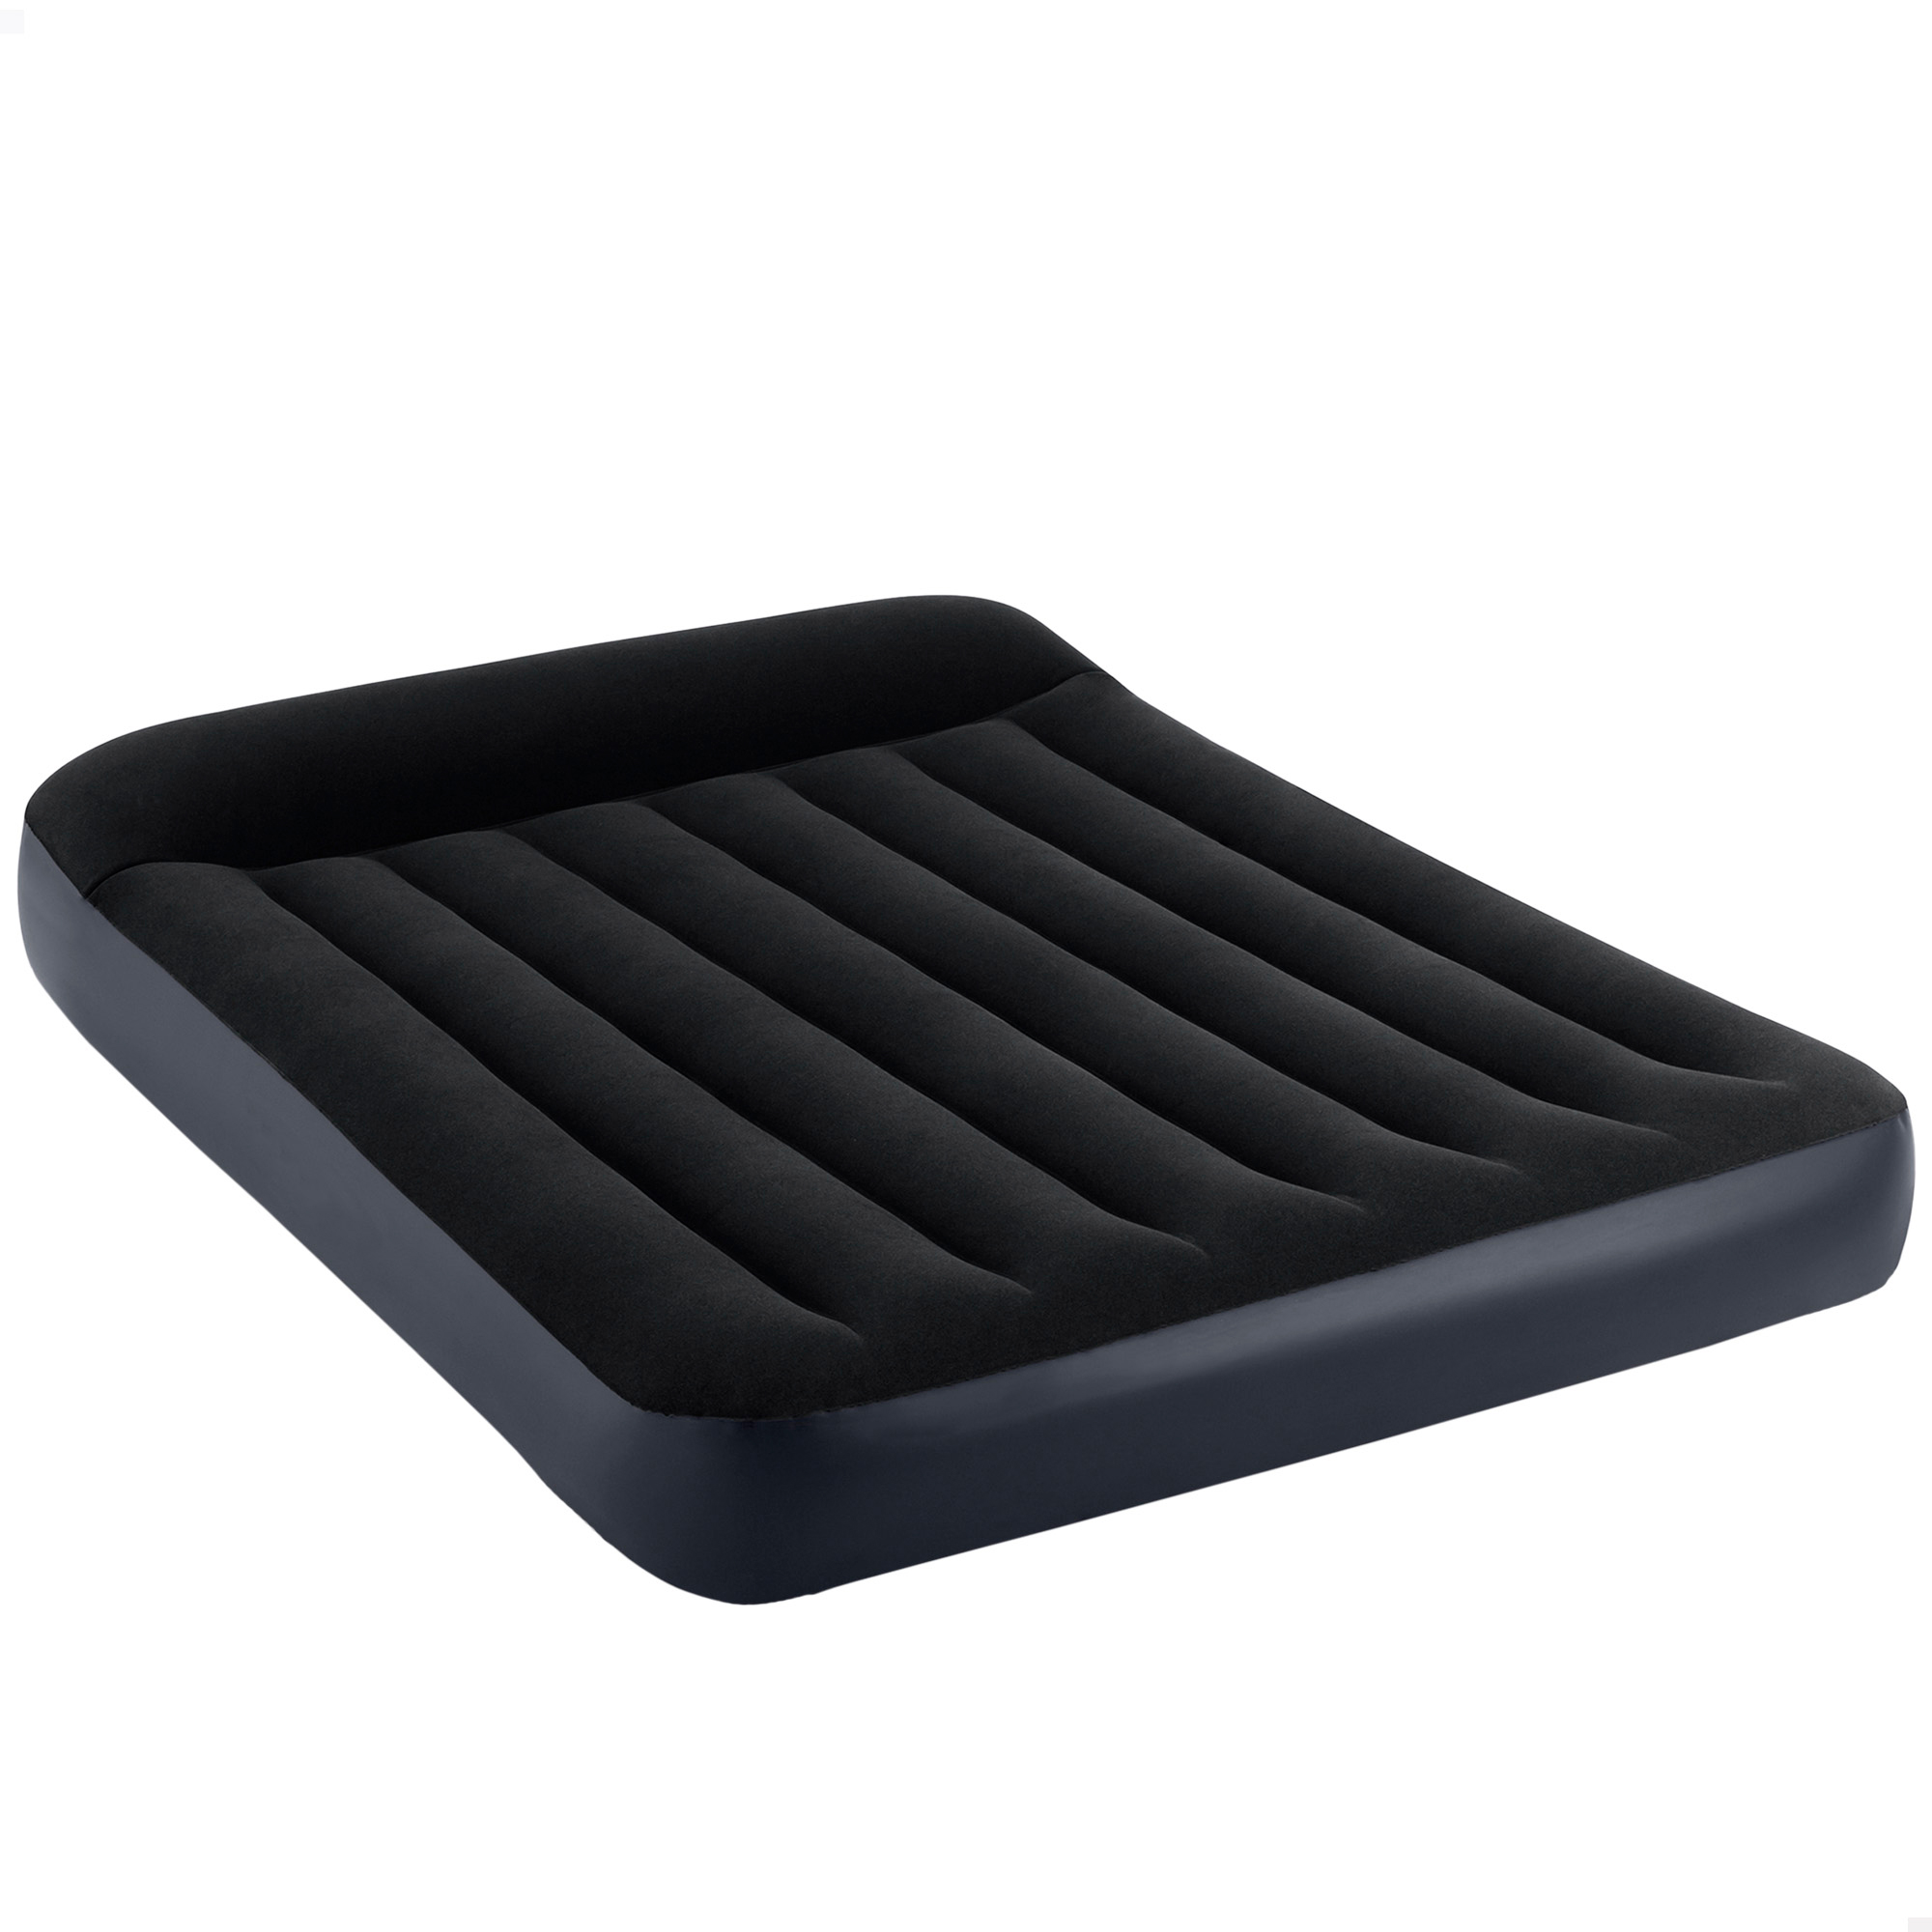 Cama De Aire Dura Beam Standard Intex Pillow Rest Classic - negro - 